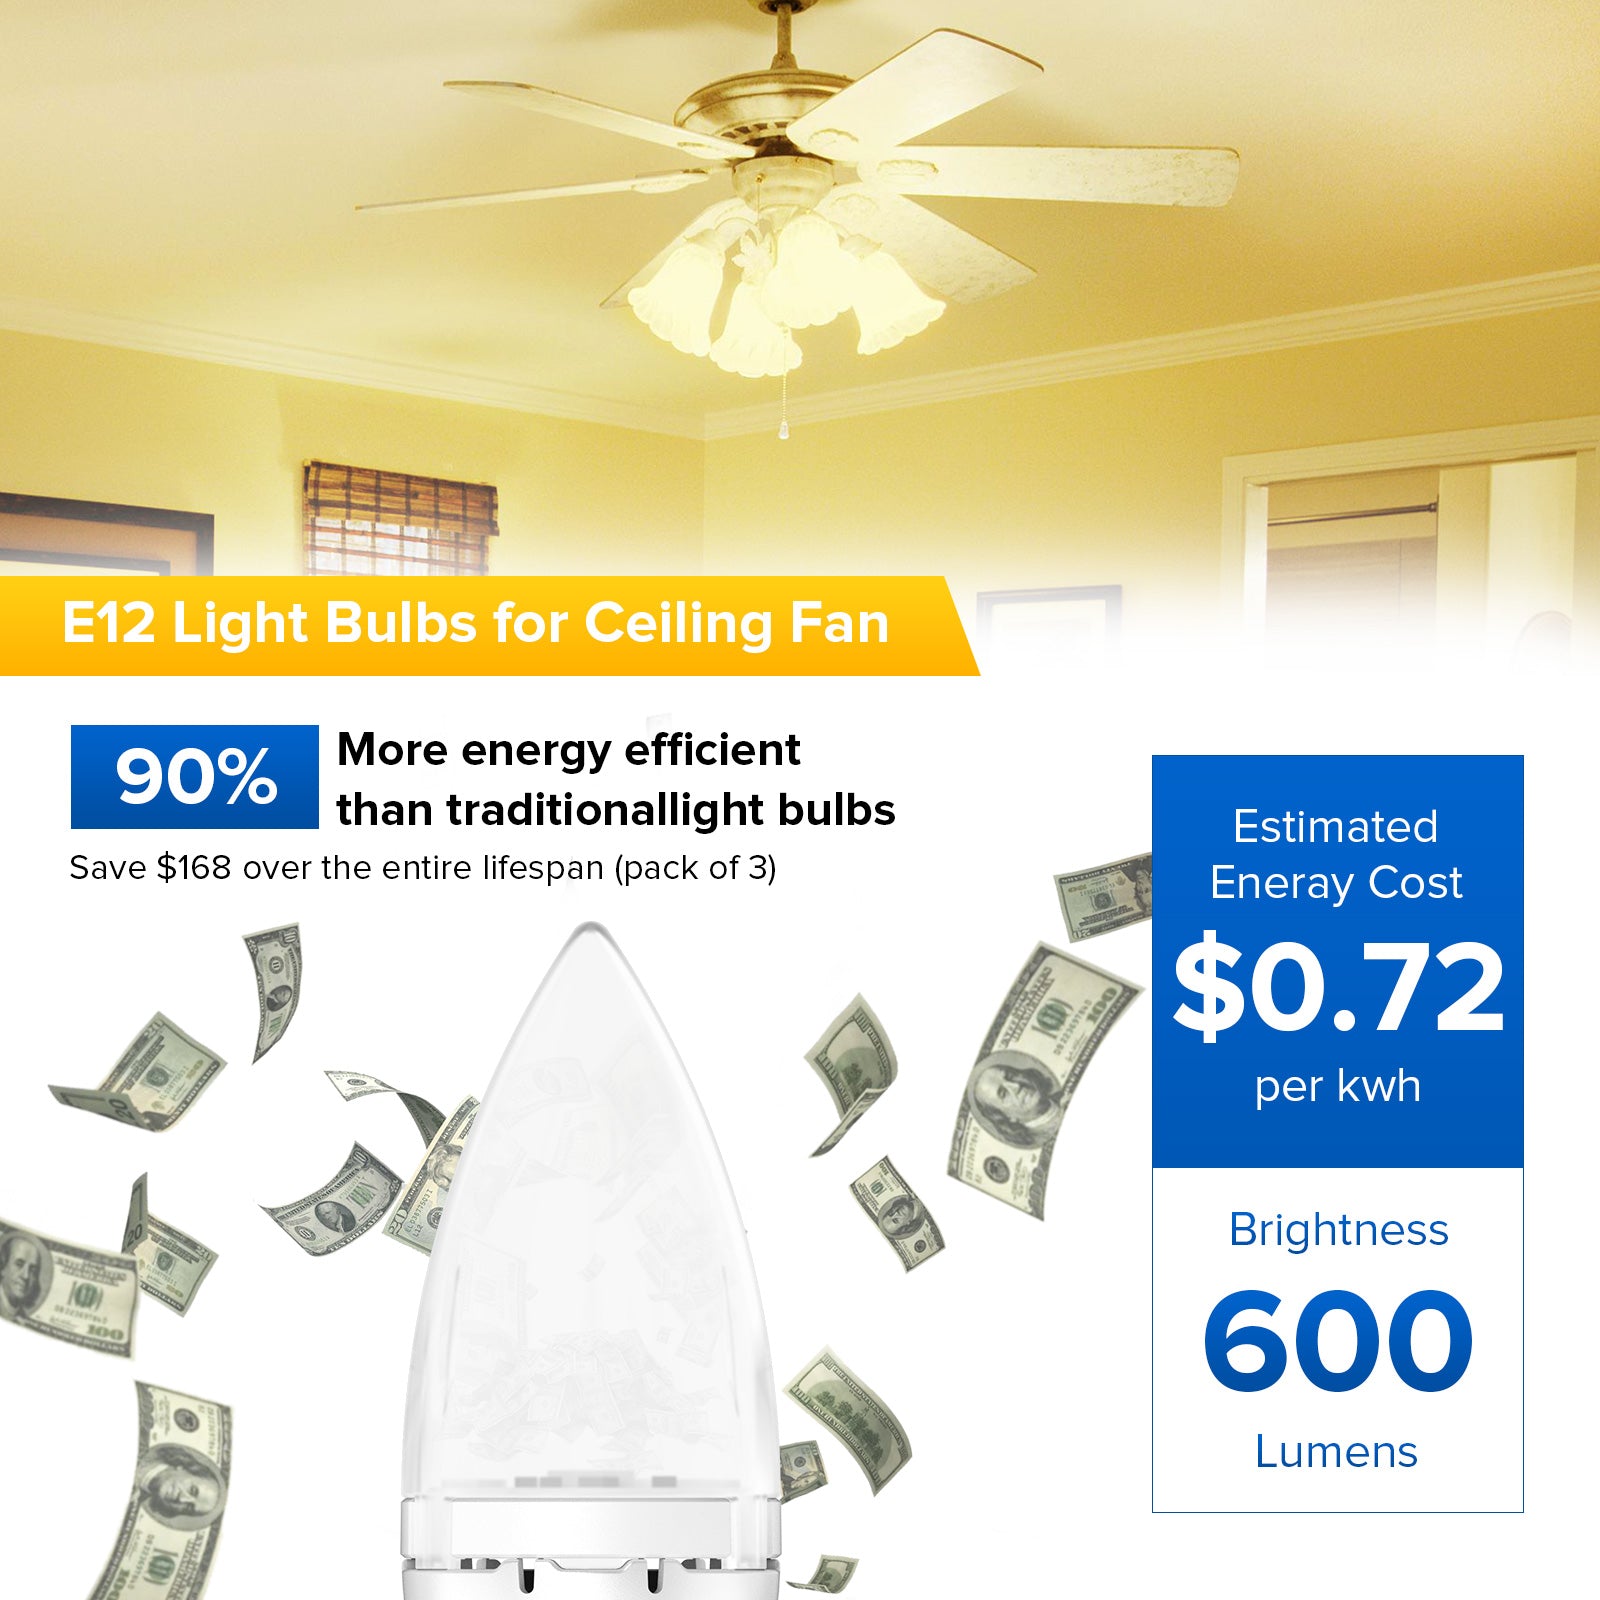 6W Candelabra LED Light Bulb (US ONLY)